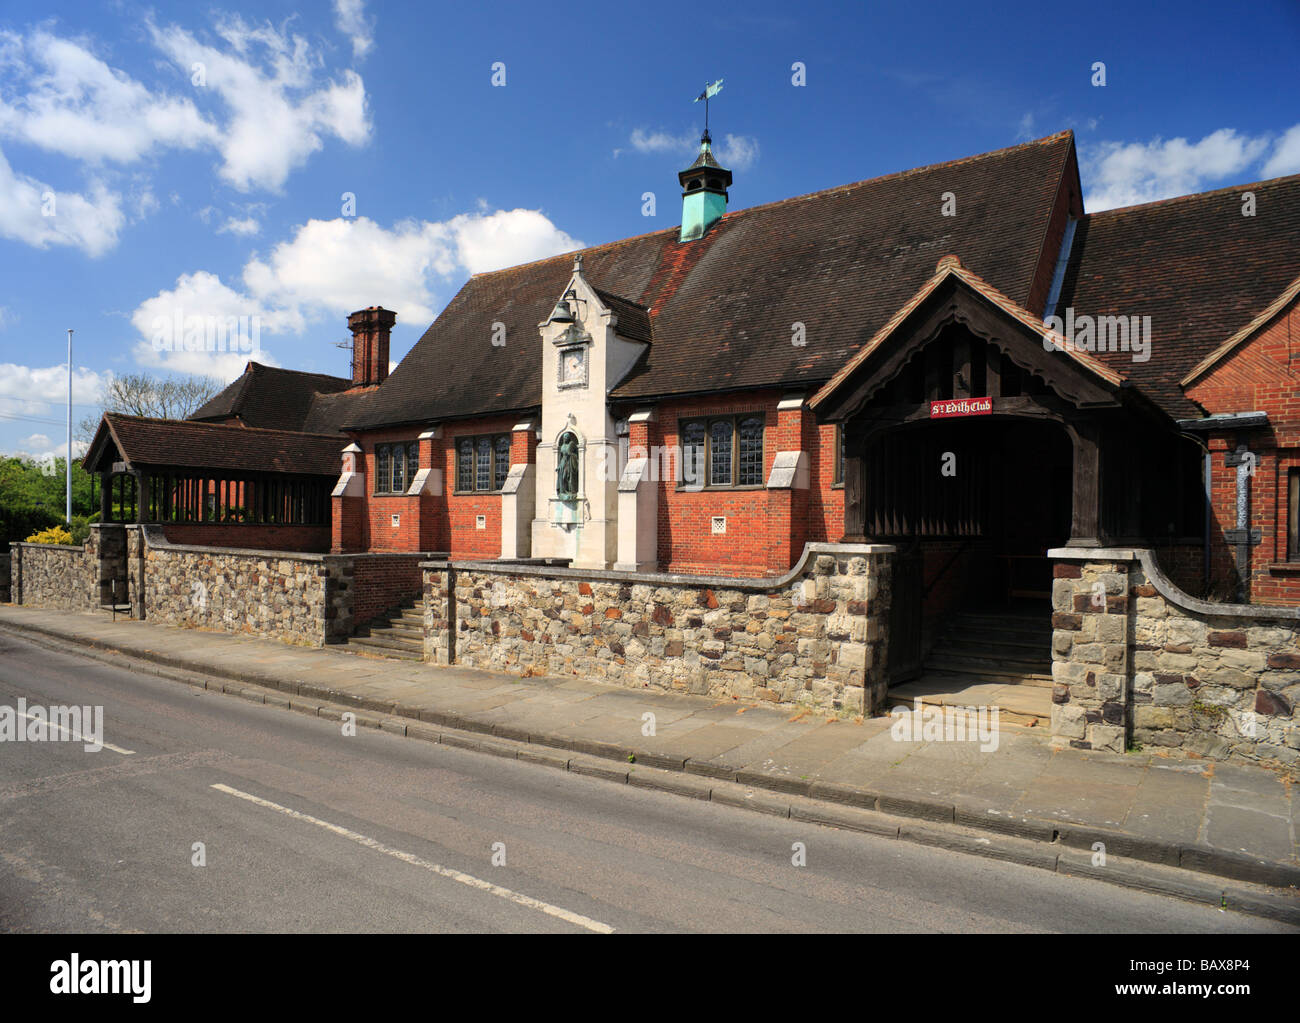 Le village hall Sevenoaks. Sevenoaks, Kent, Angleterre, Royaume-Uni. Banque D'Images